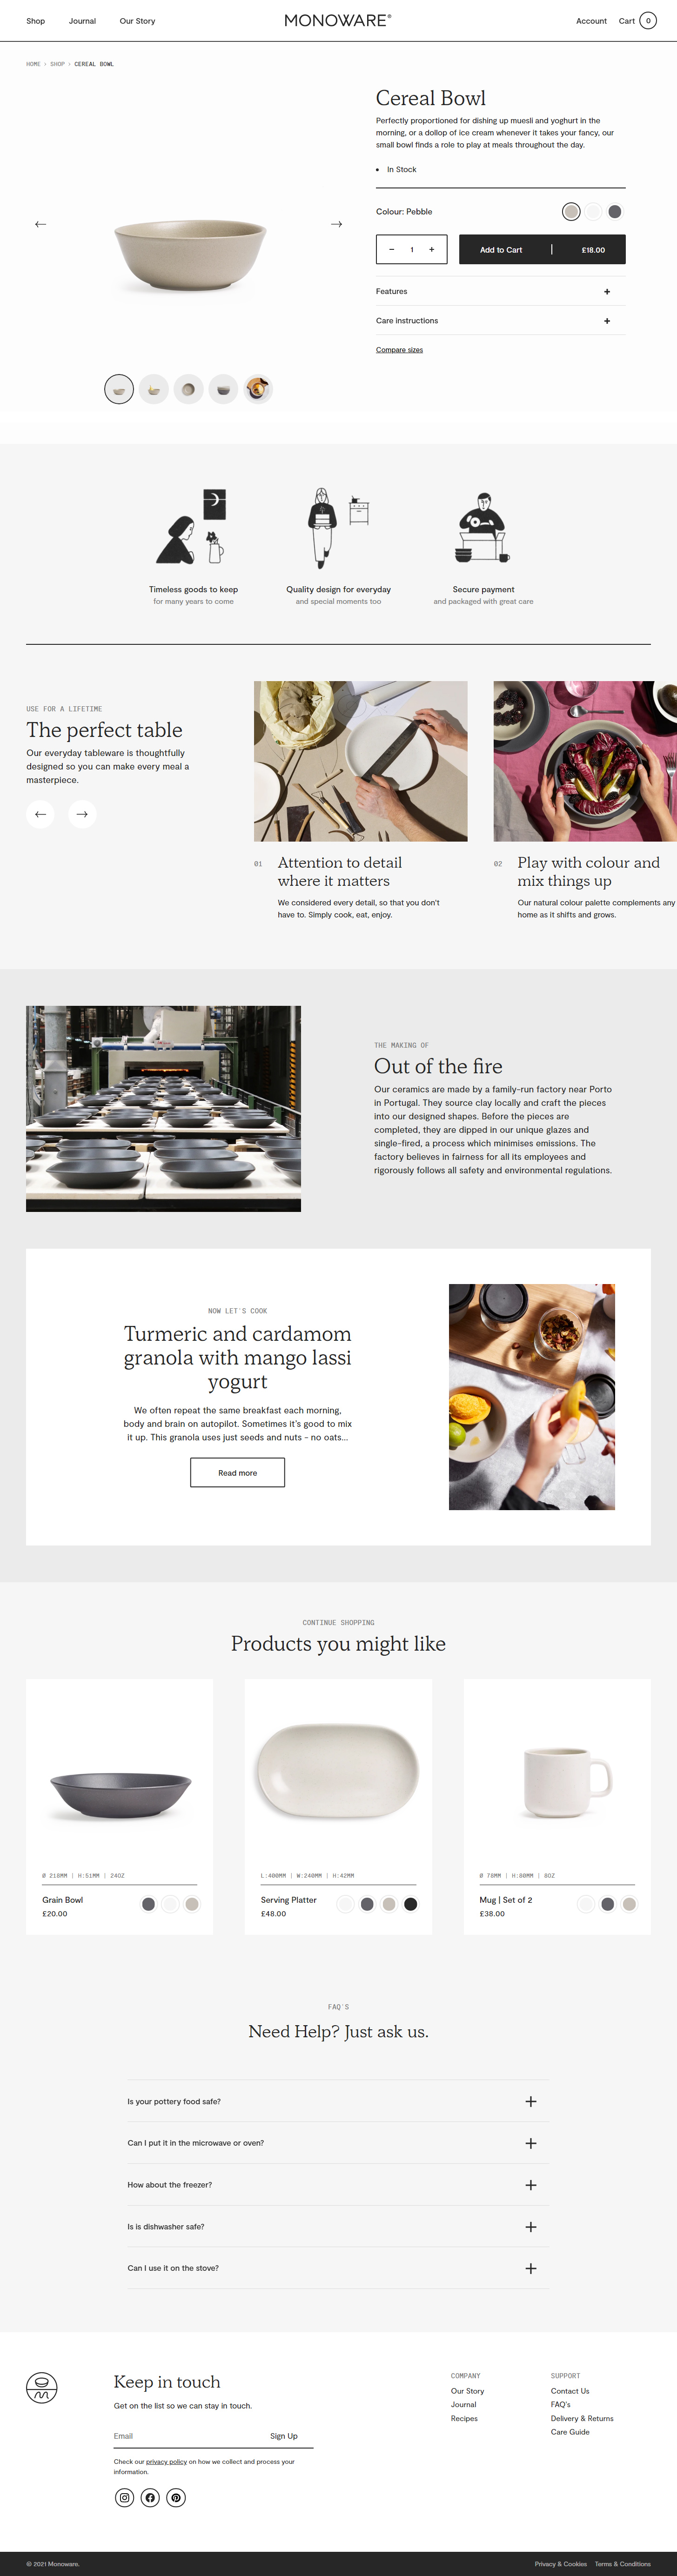 Monoware餐具品牌网站设计